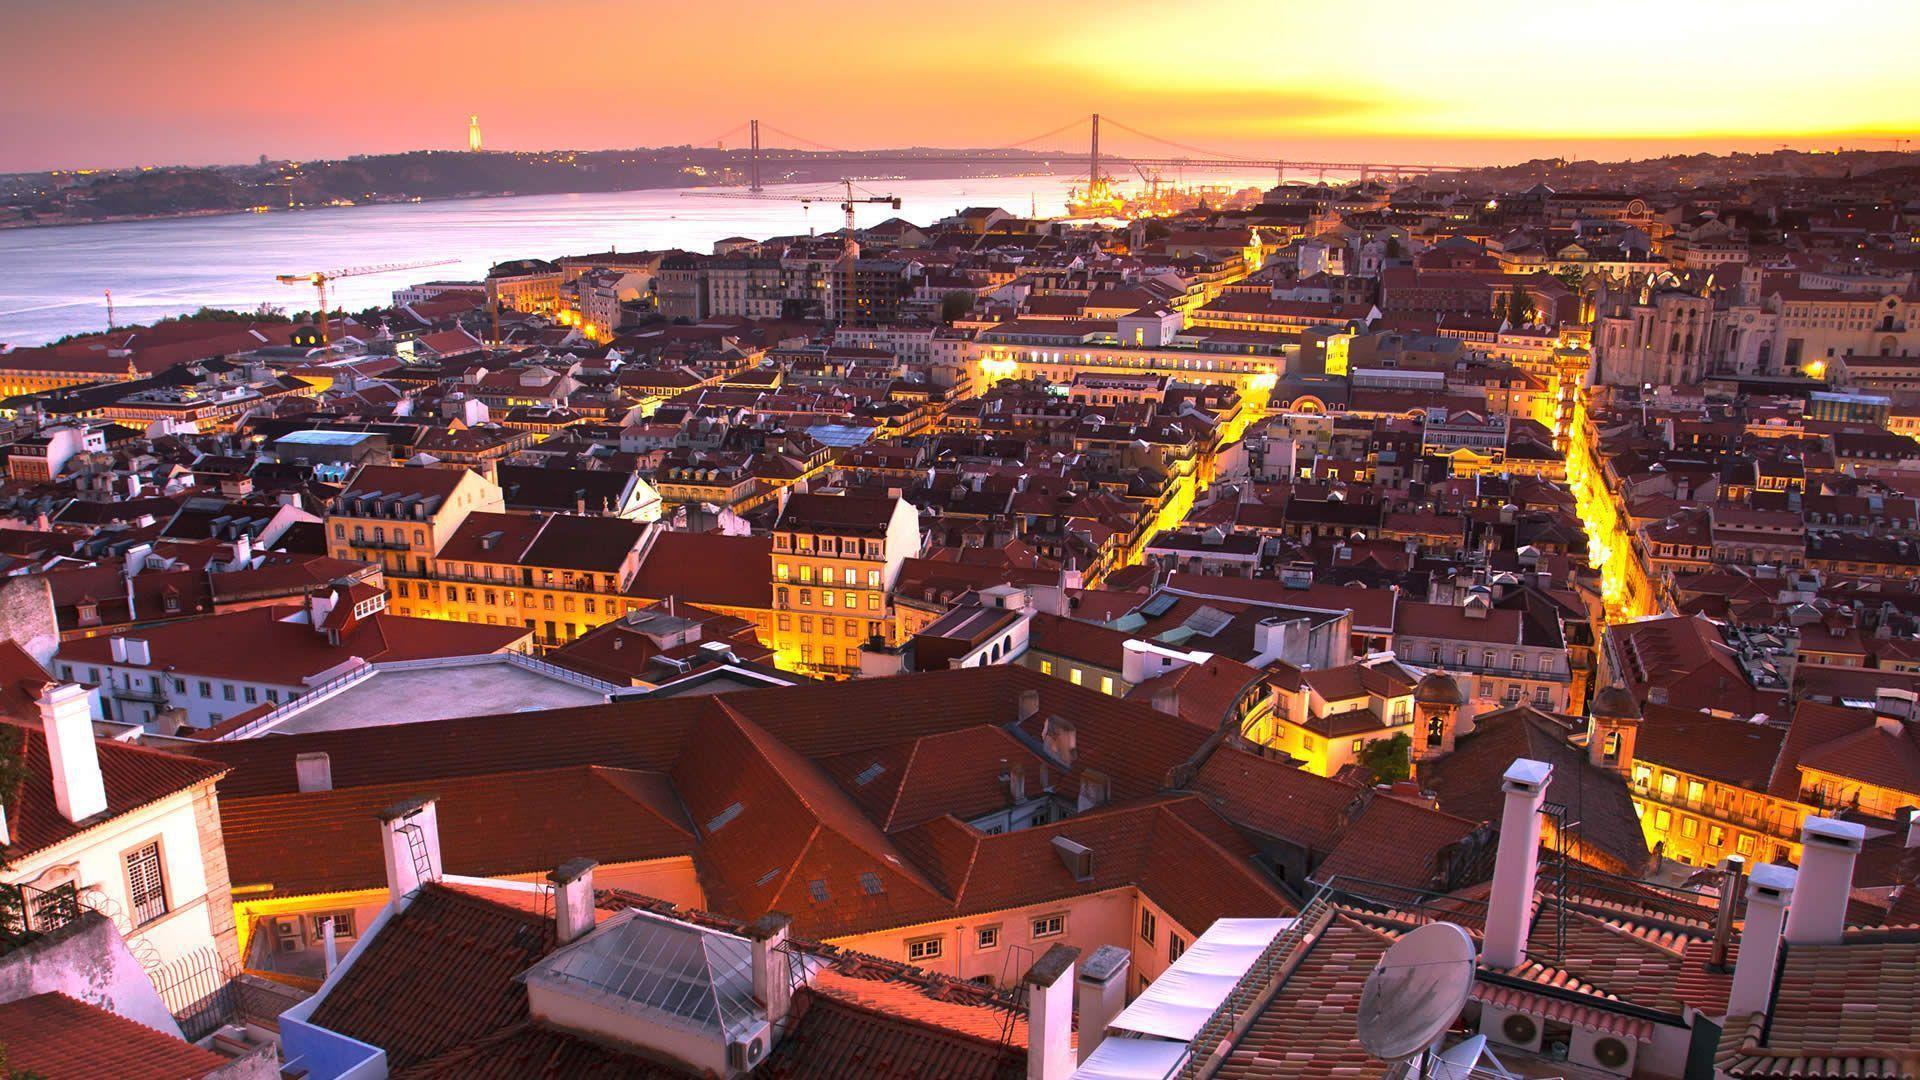 Lisbon Wallpaper Image Photo Picture Background